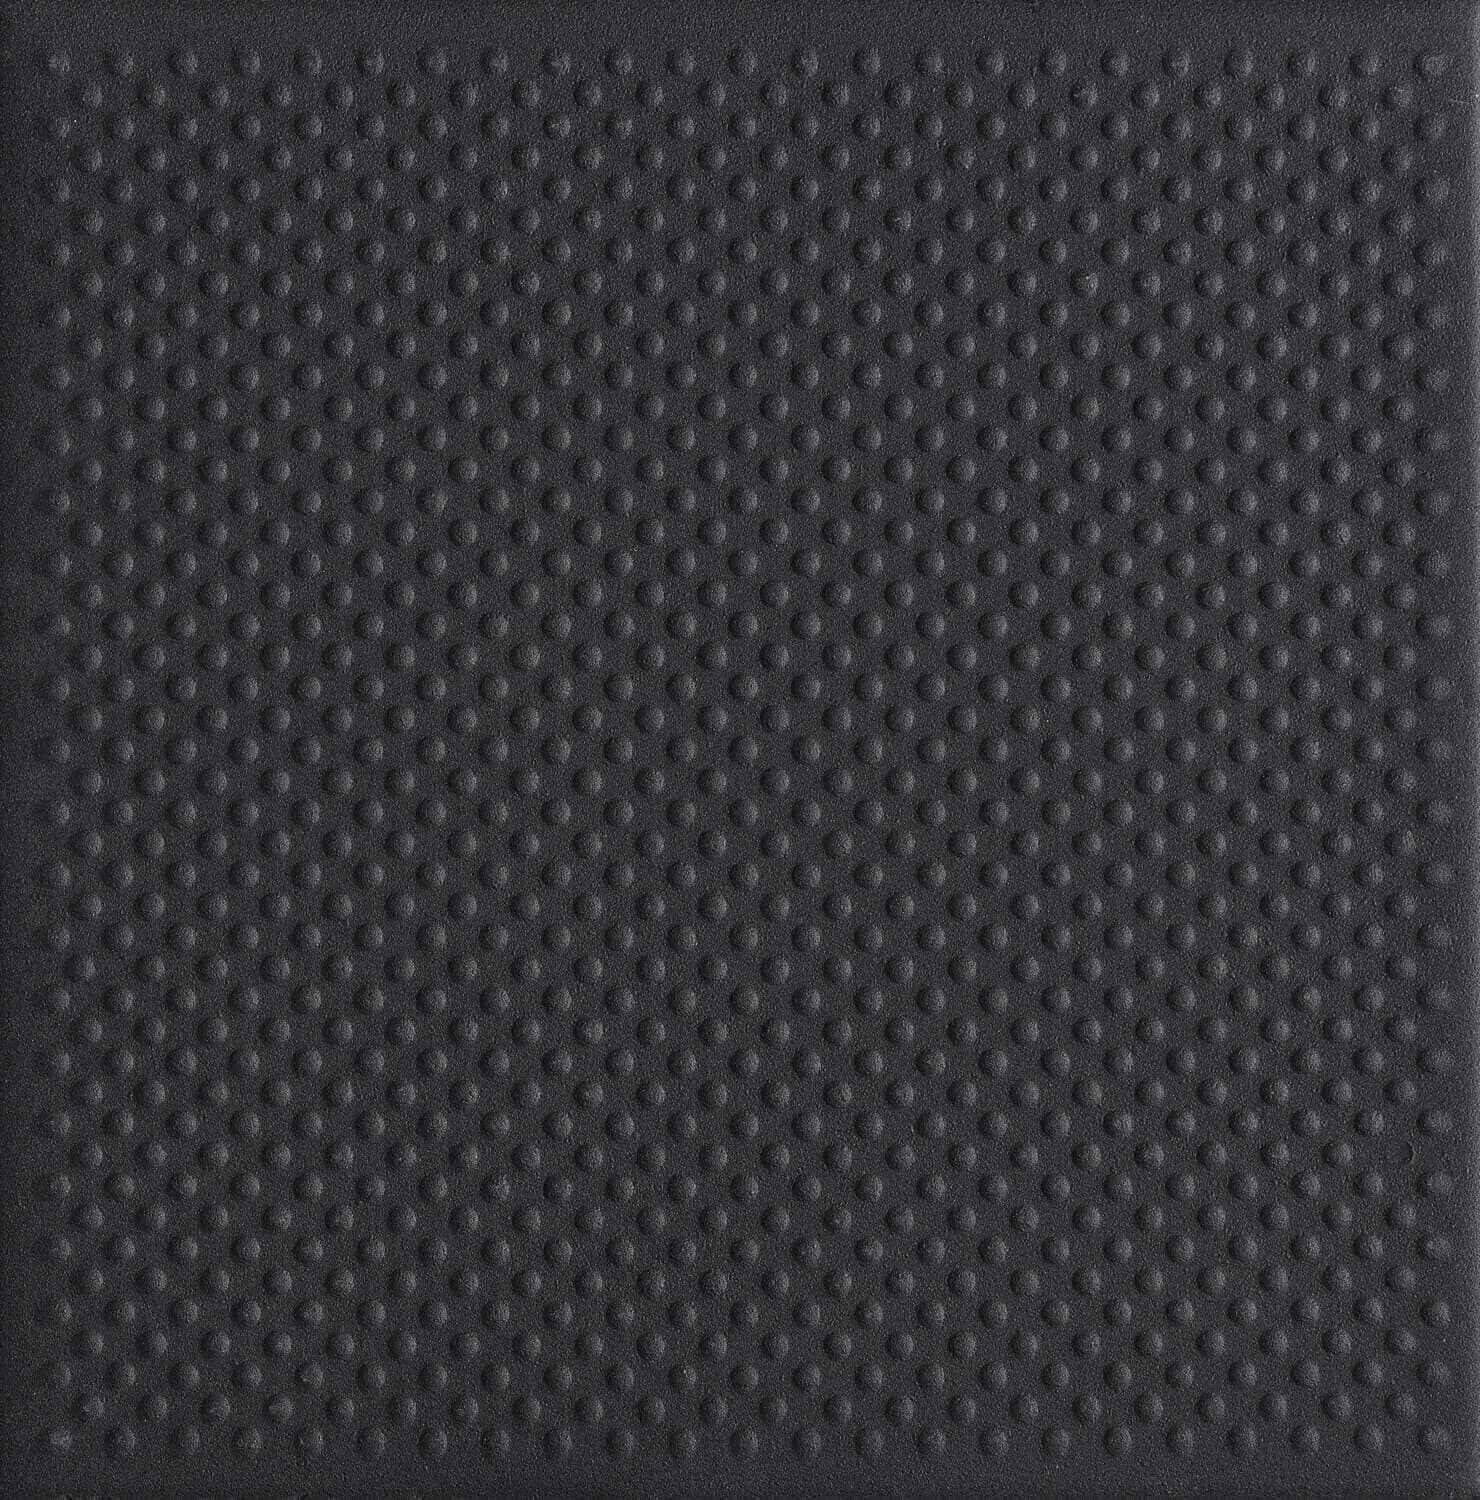 Dorset Woolliscroft Pinhead Black Slip Resistant Quarry Tile 148x148mm